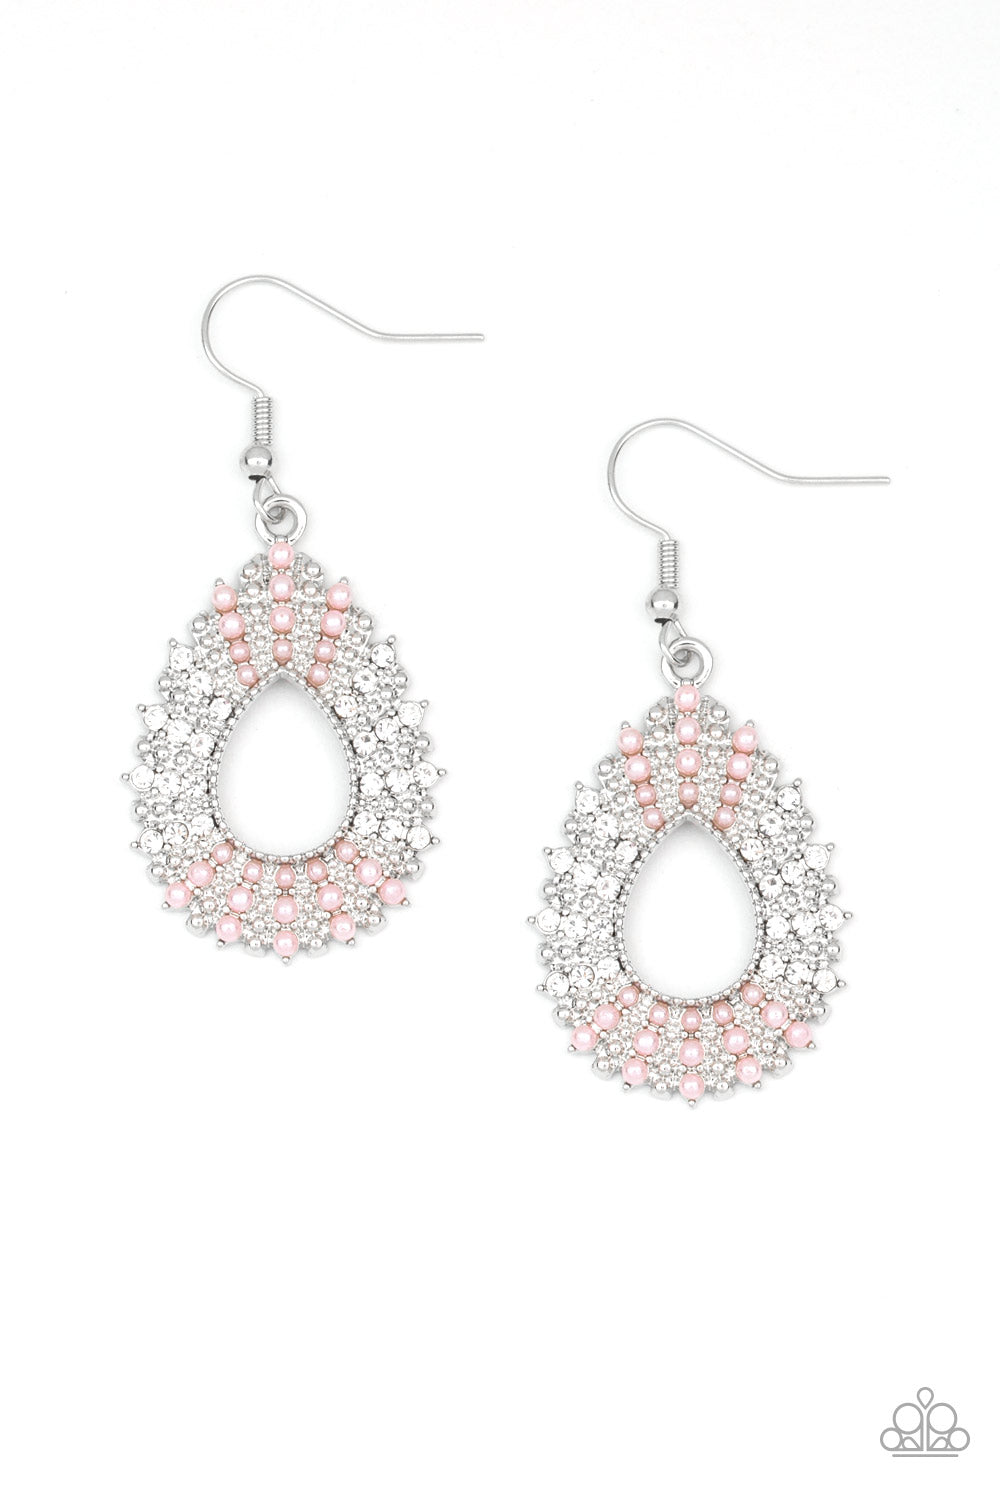 Diva Dream Pink Paparazzi Earrings Cashmere Pink Jewels - Cashmere Pink Jewels & Accessories, Cashmere Pink Jewels & Accessories - Paparazzi